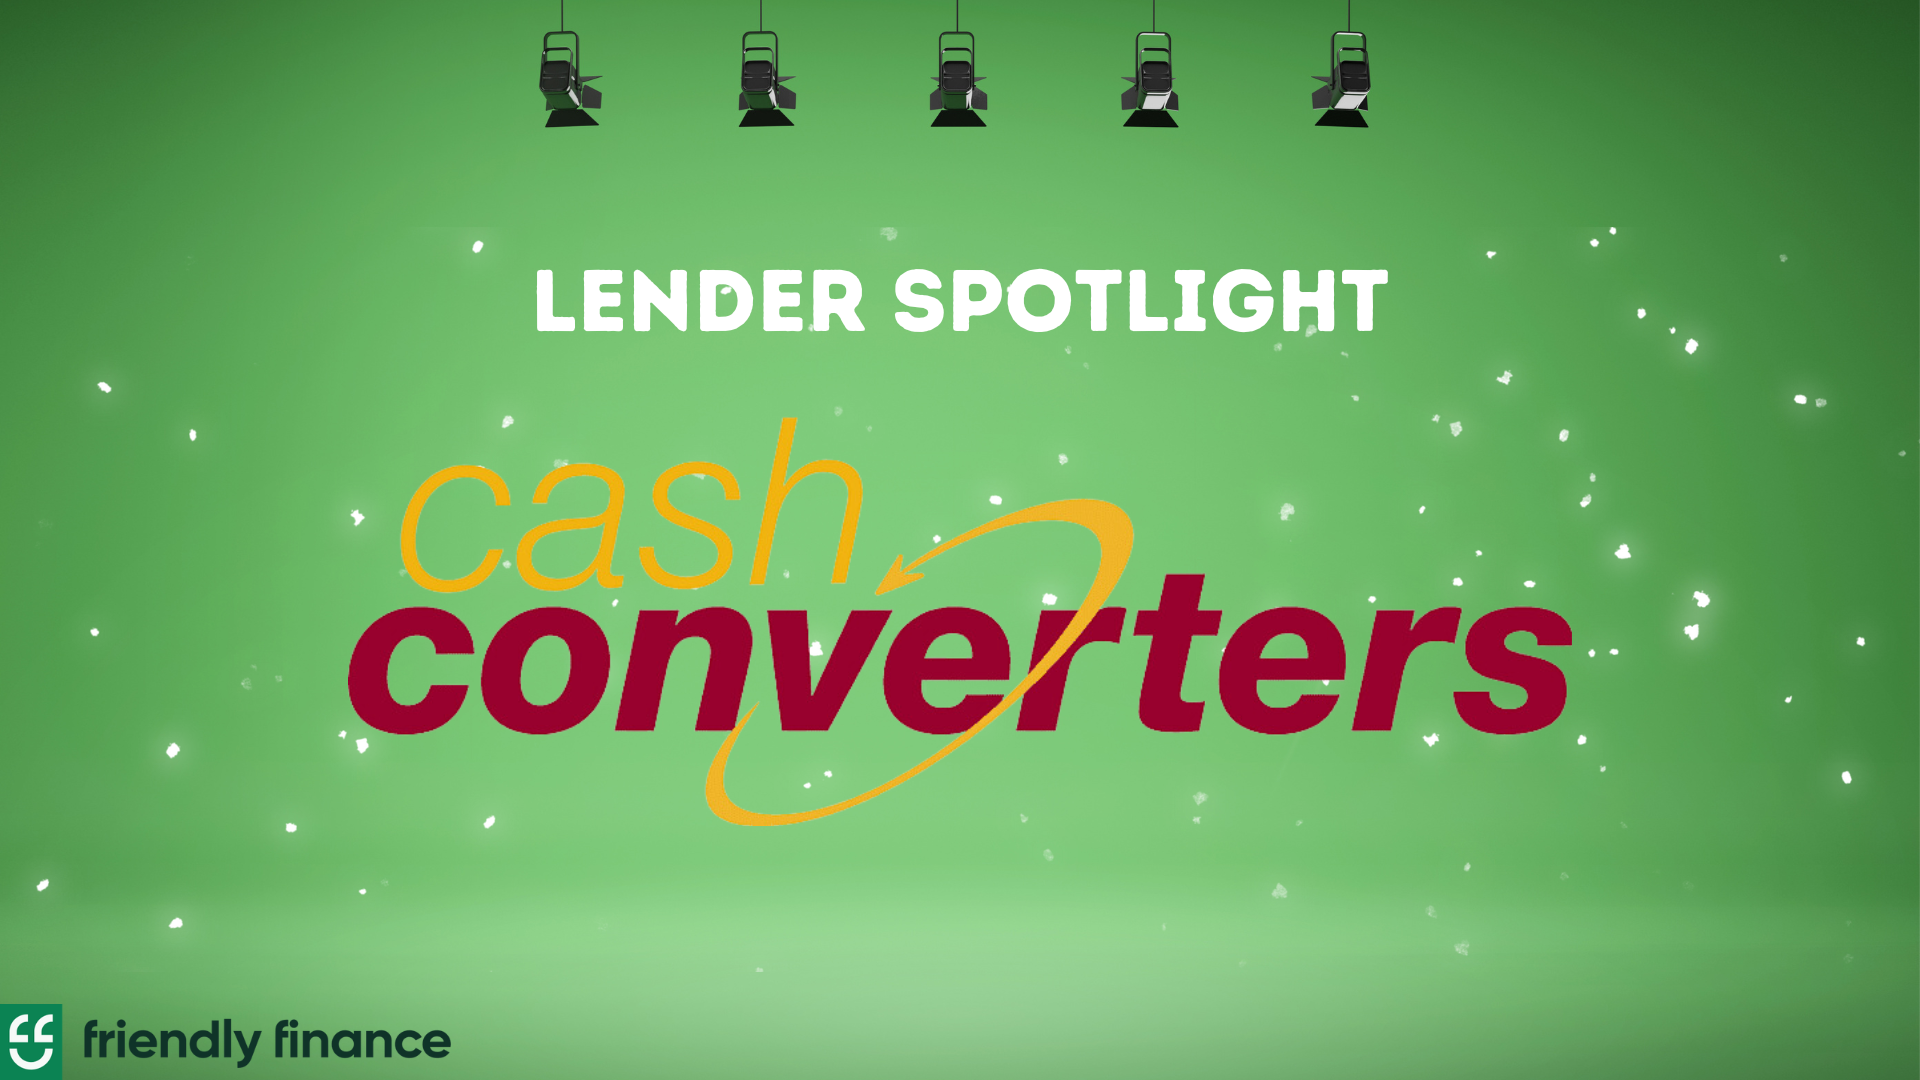 spotlights pointing to Cash Converters logo